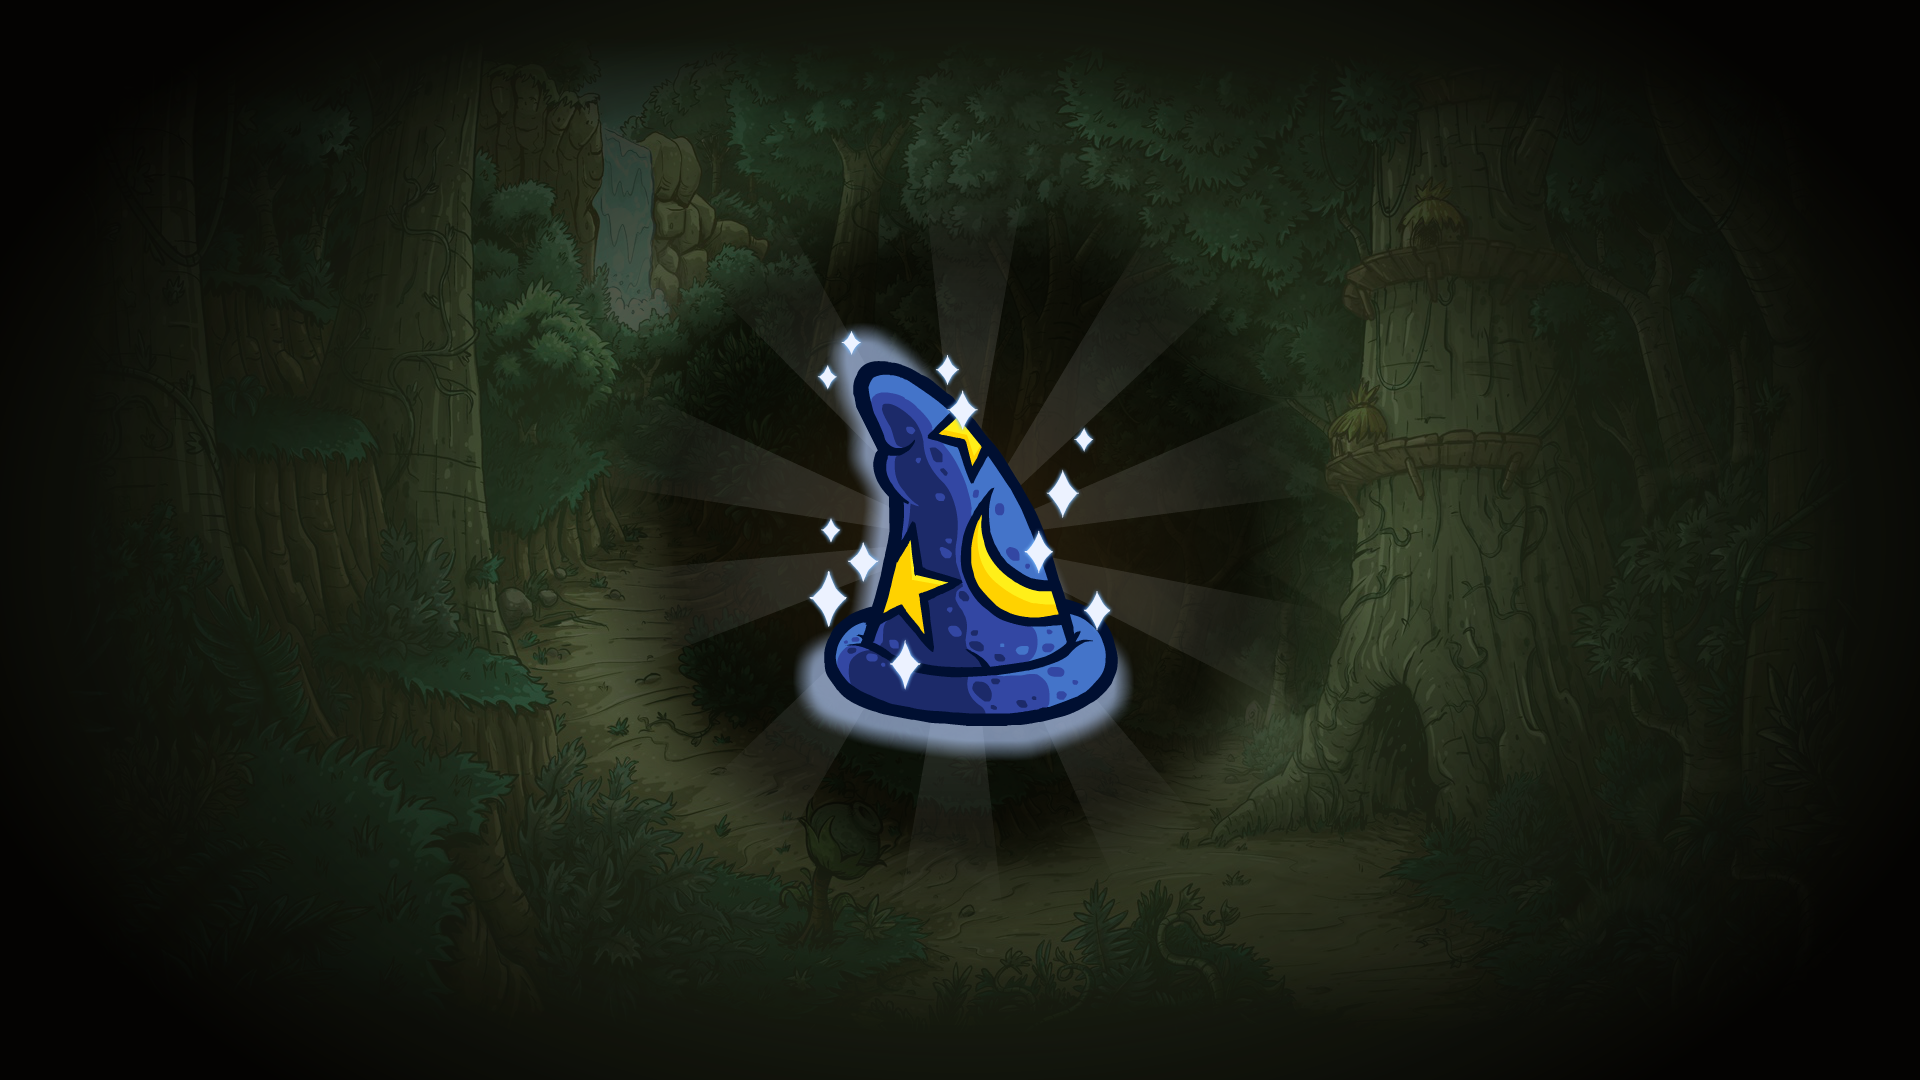 Icon for Sorcerer's Apprentice